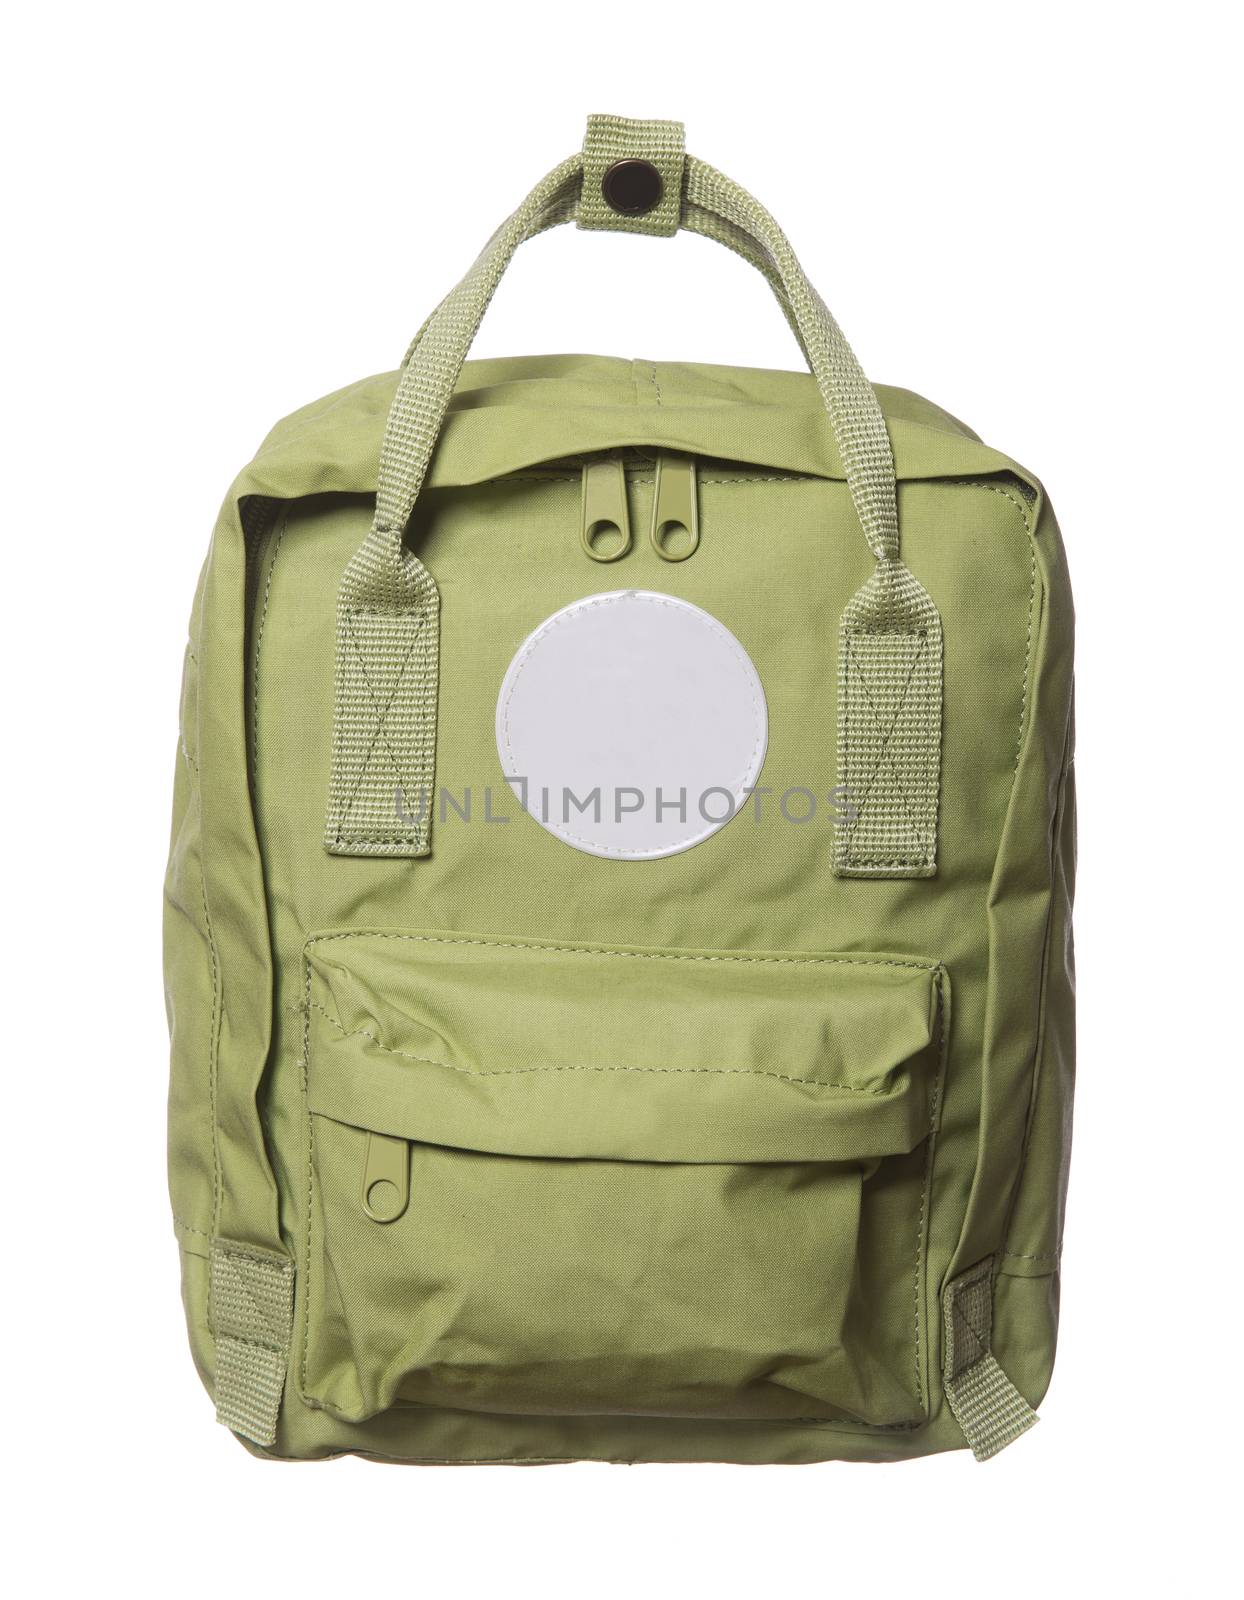 Childs backpack by gemenacom